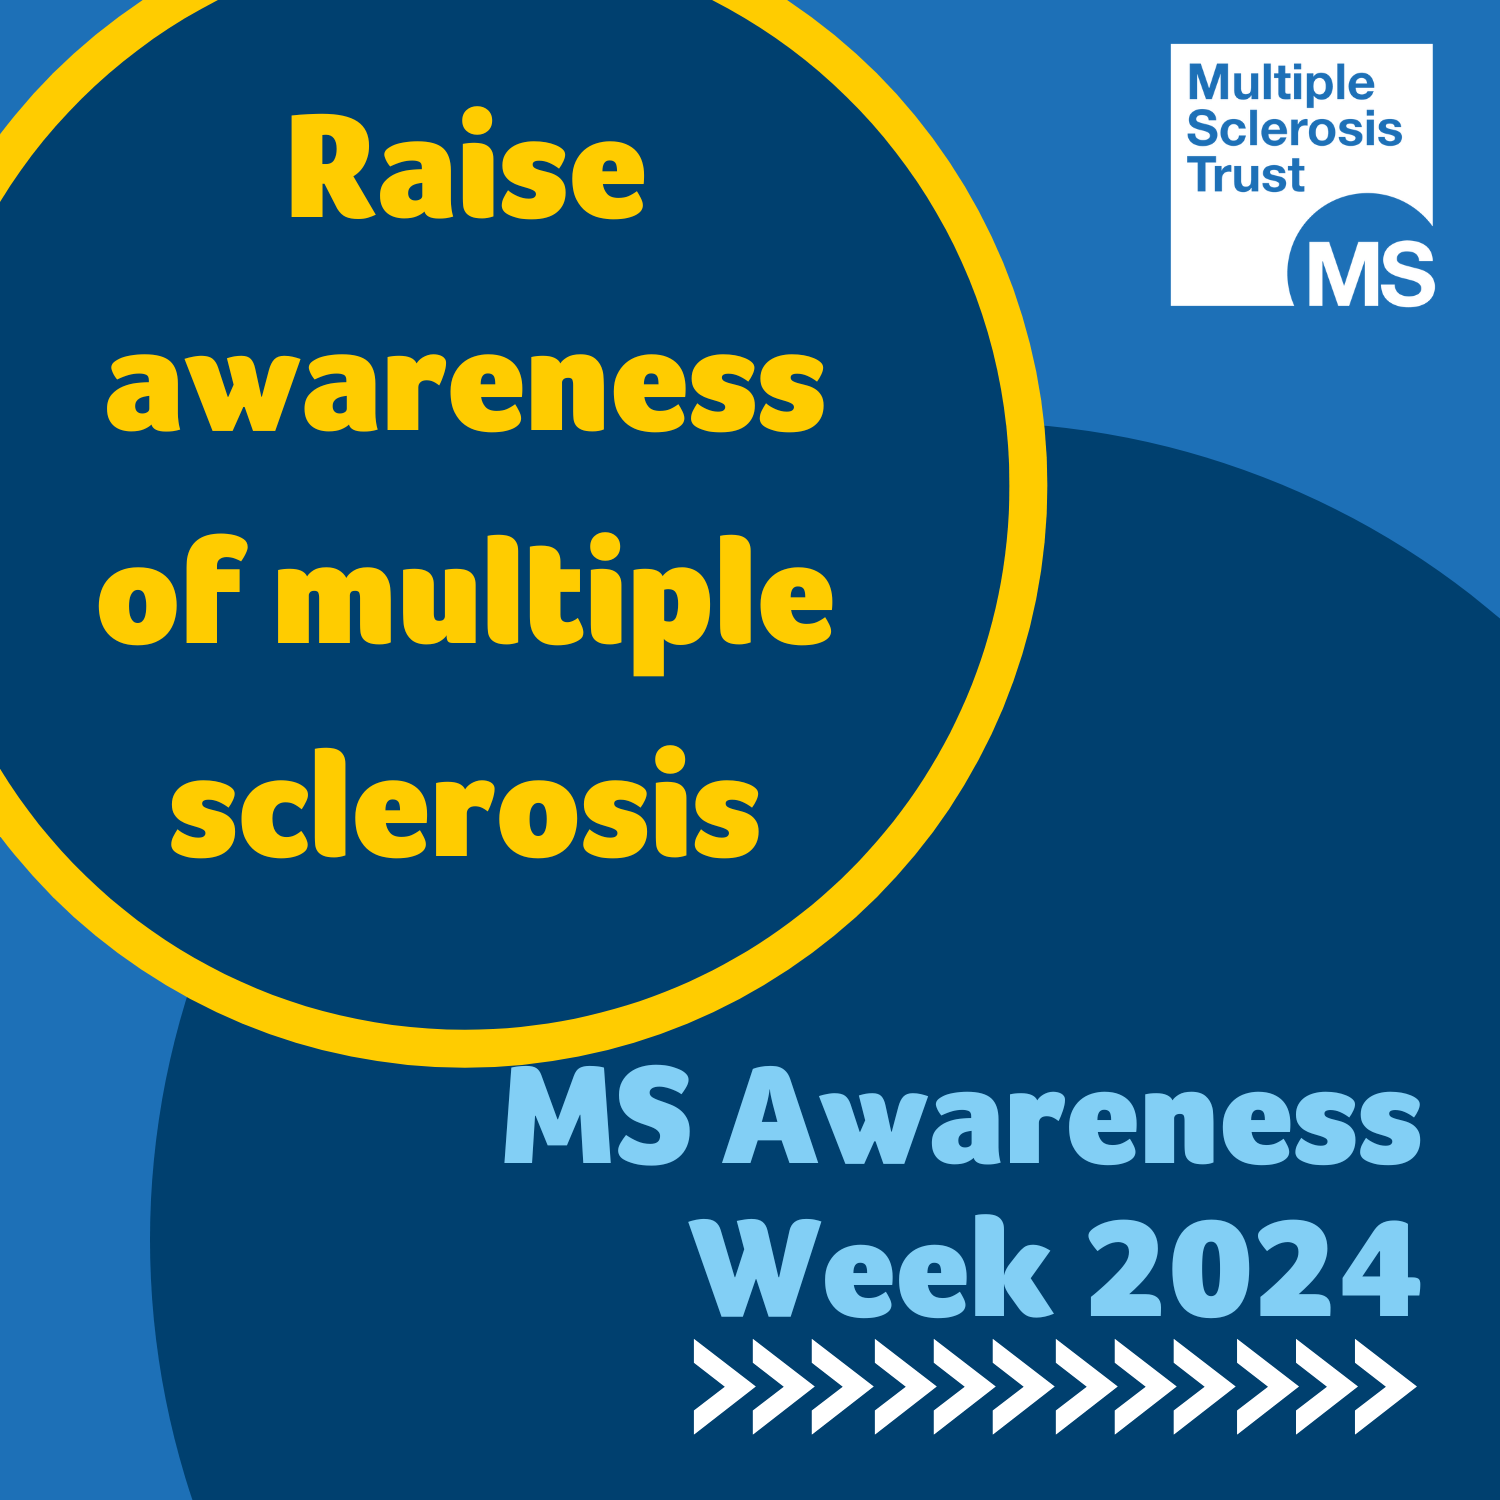 Raise awareness of multiple sclerosis. MS awareness week 2024 poster